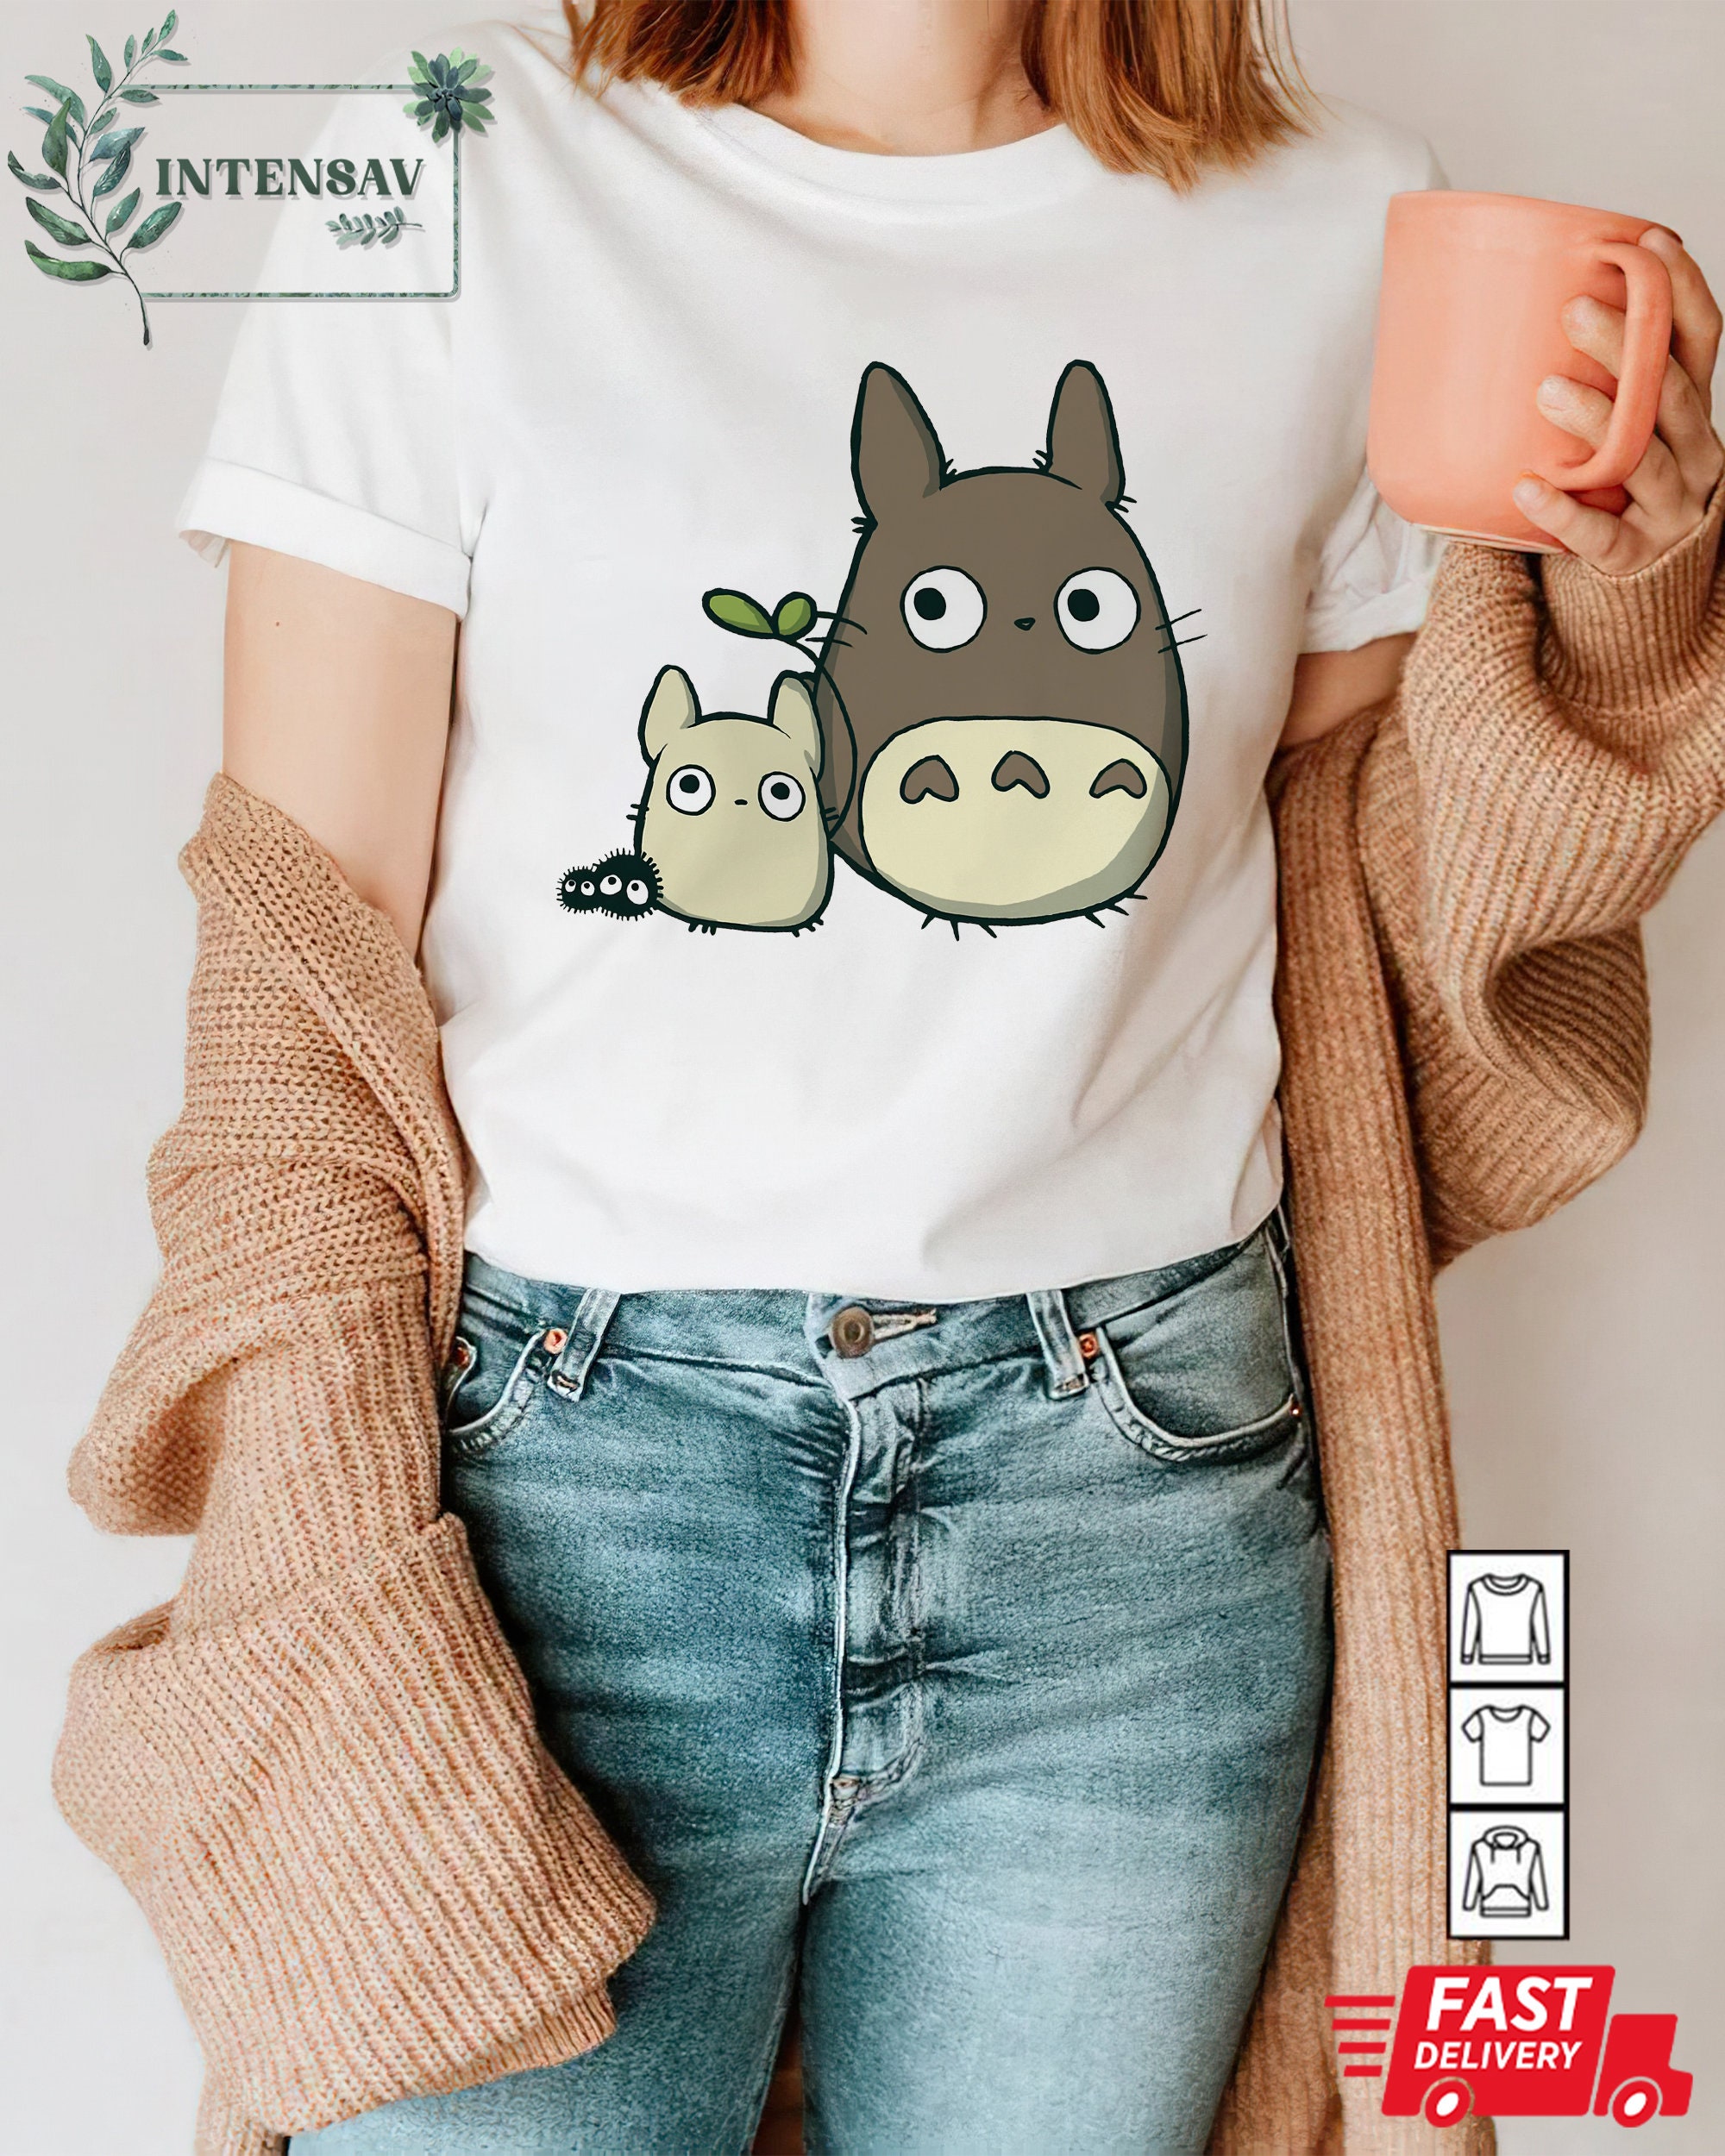 Discover Camiseta Totoro Mi Vecino Tonari No Totoro para Hombre Mujer